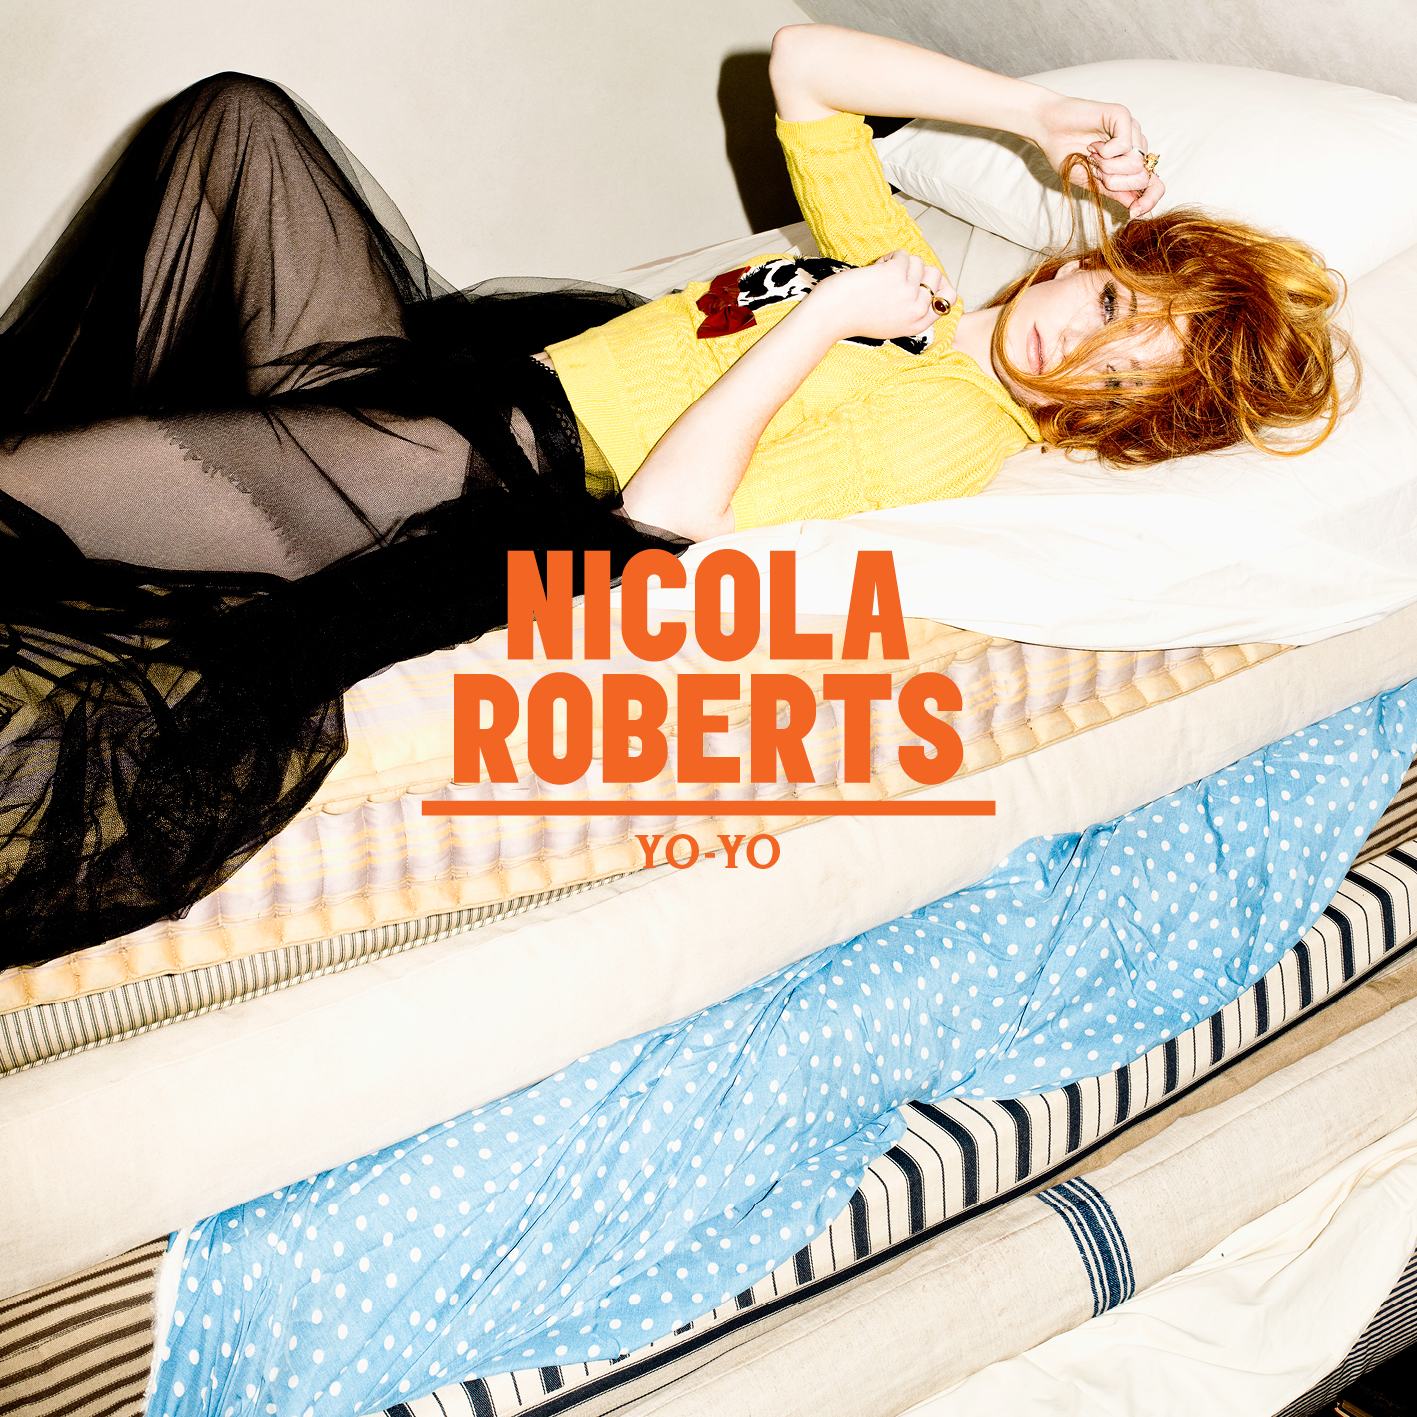 Nicola Roberts announces new single release